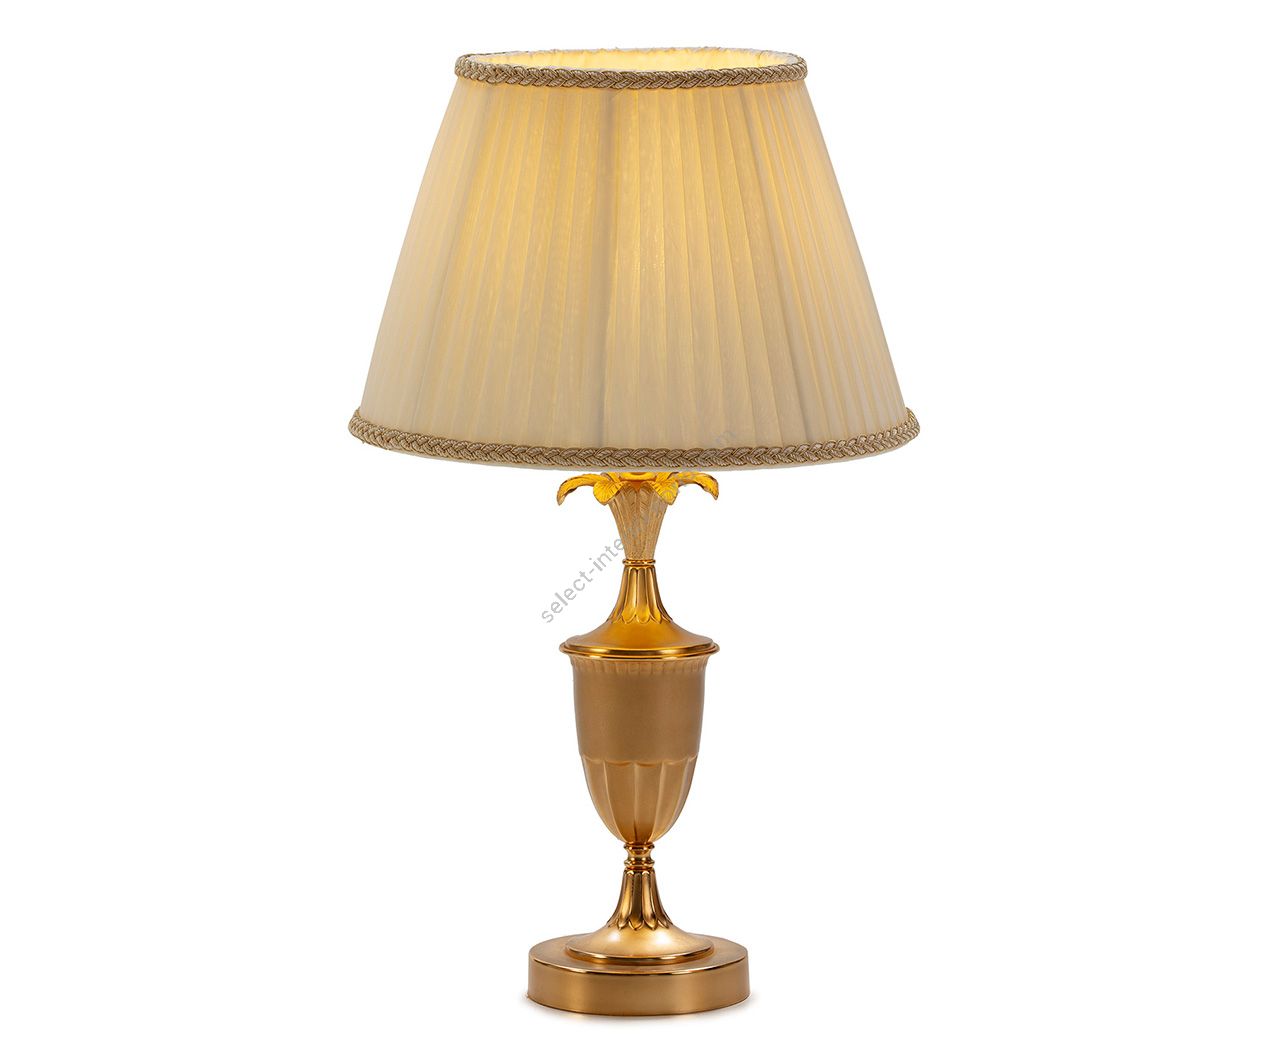 Mariner Table Lamp Royal Heritage 20305